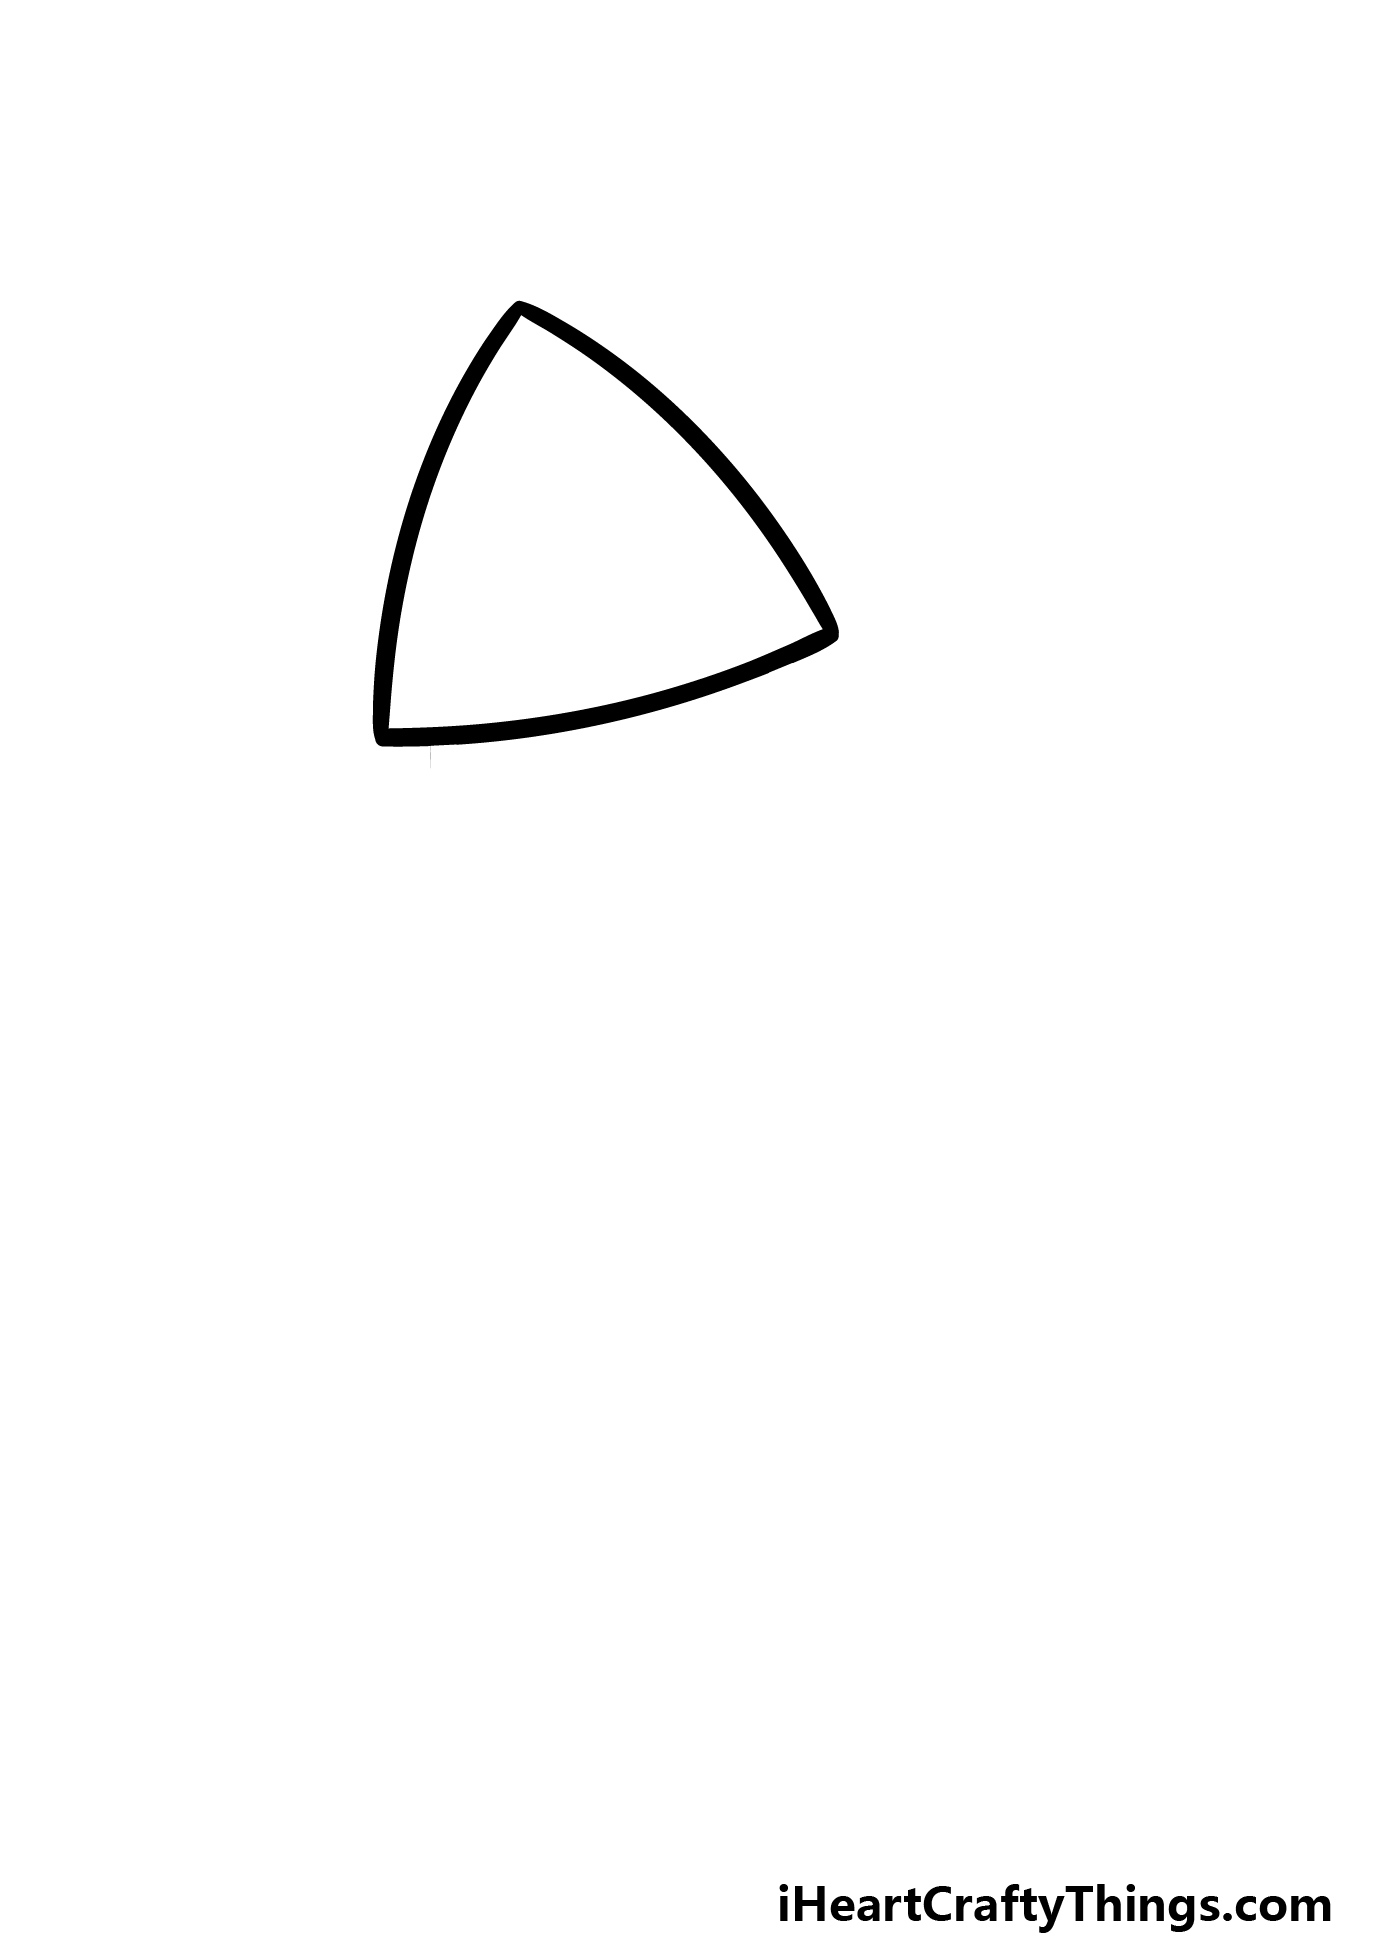 how to draw a cartoon rocket step 1 